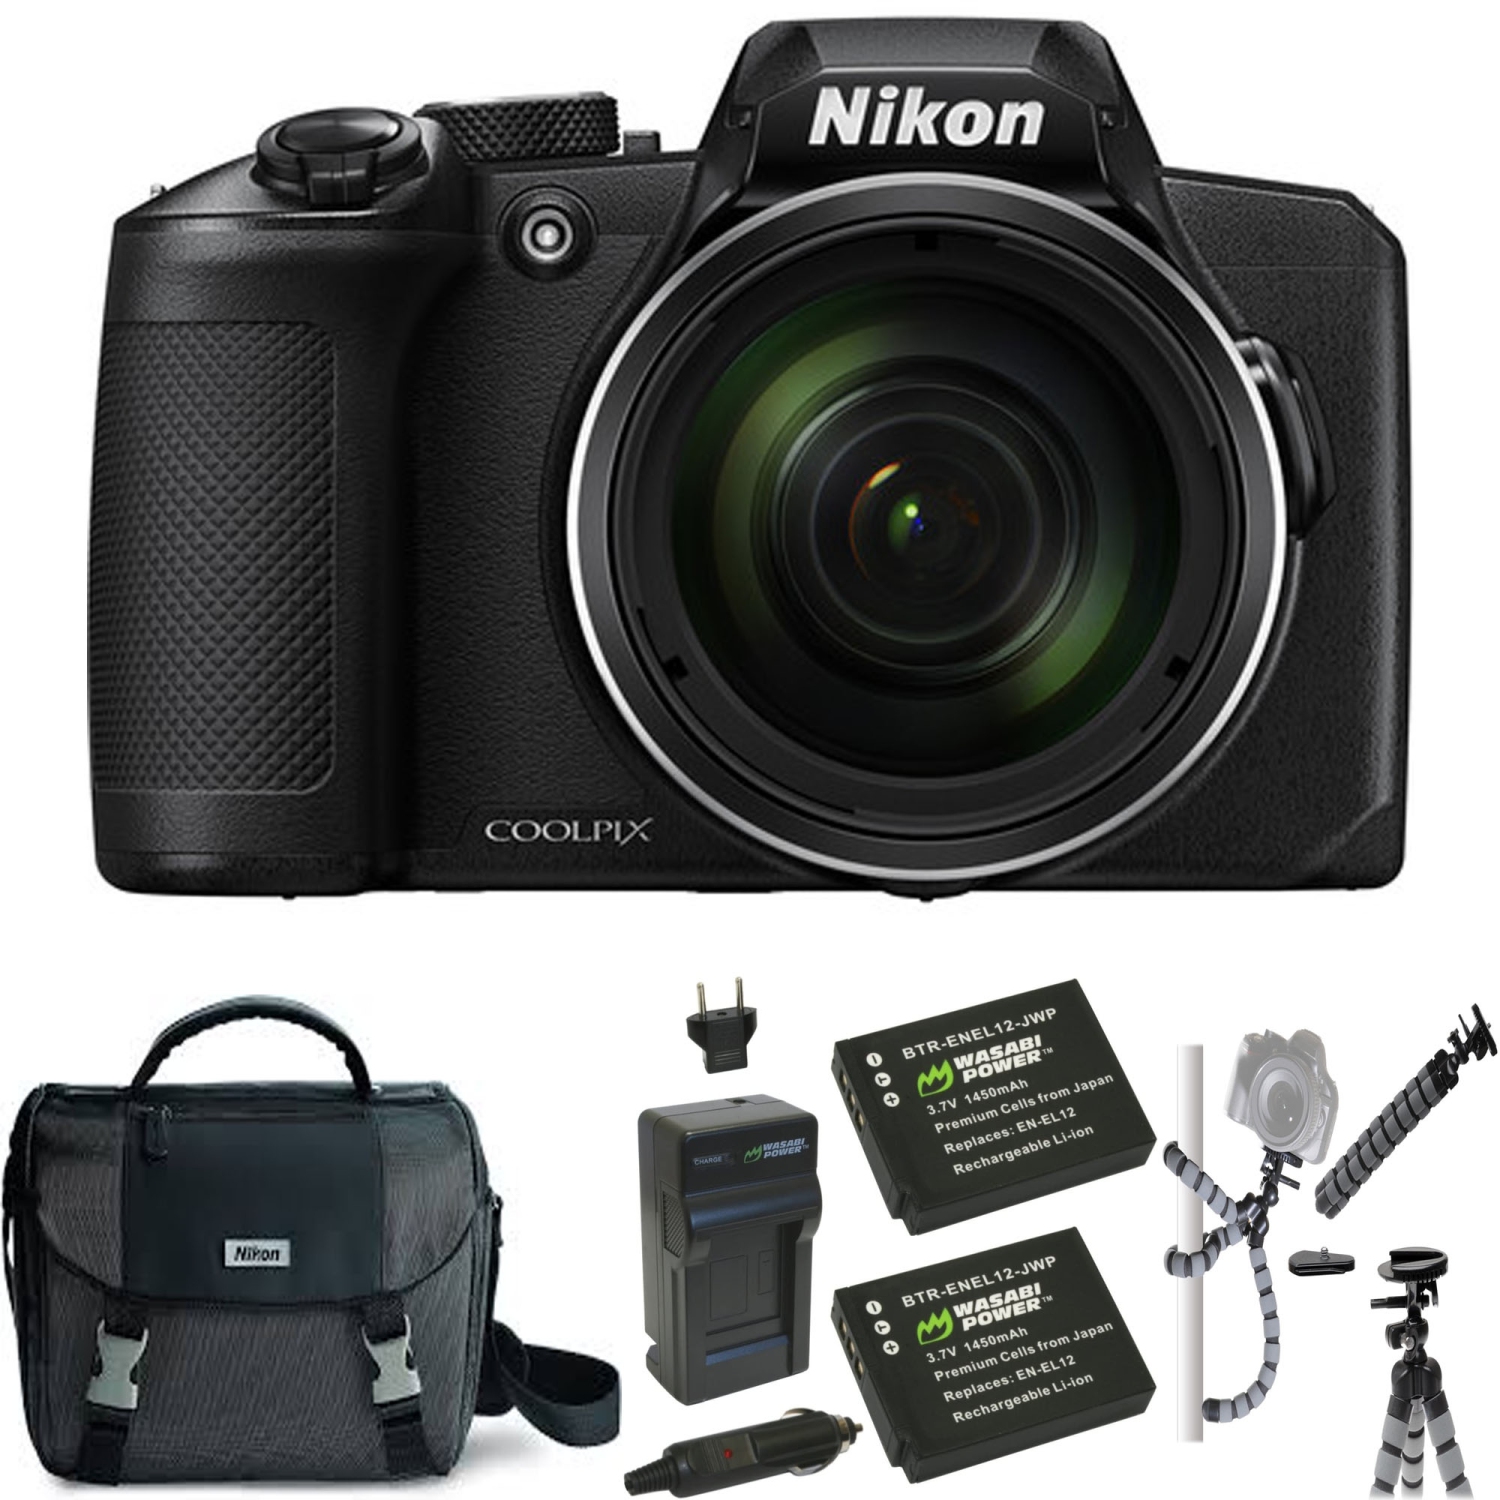 Nikon COOLPIX B600 Digital Camera (Black) with Nikon Case | 2x Spare Batteries & AC/DC Charger | Spider Tripod - US Version w/ Seller Warranty